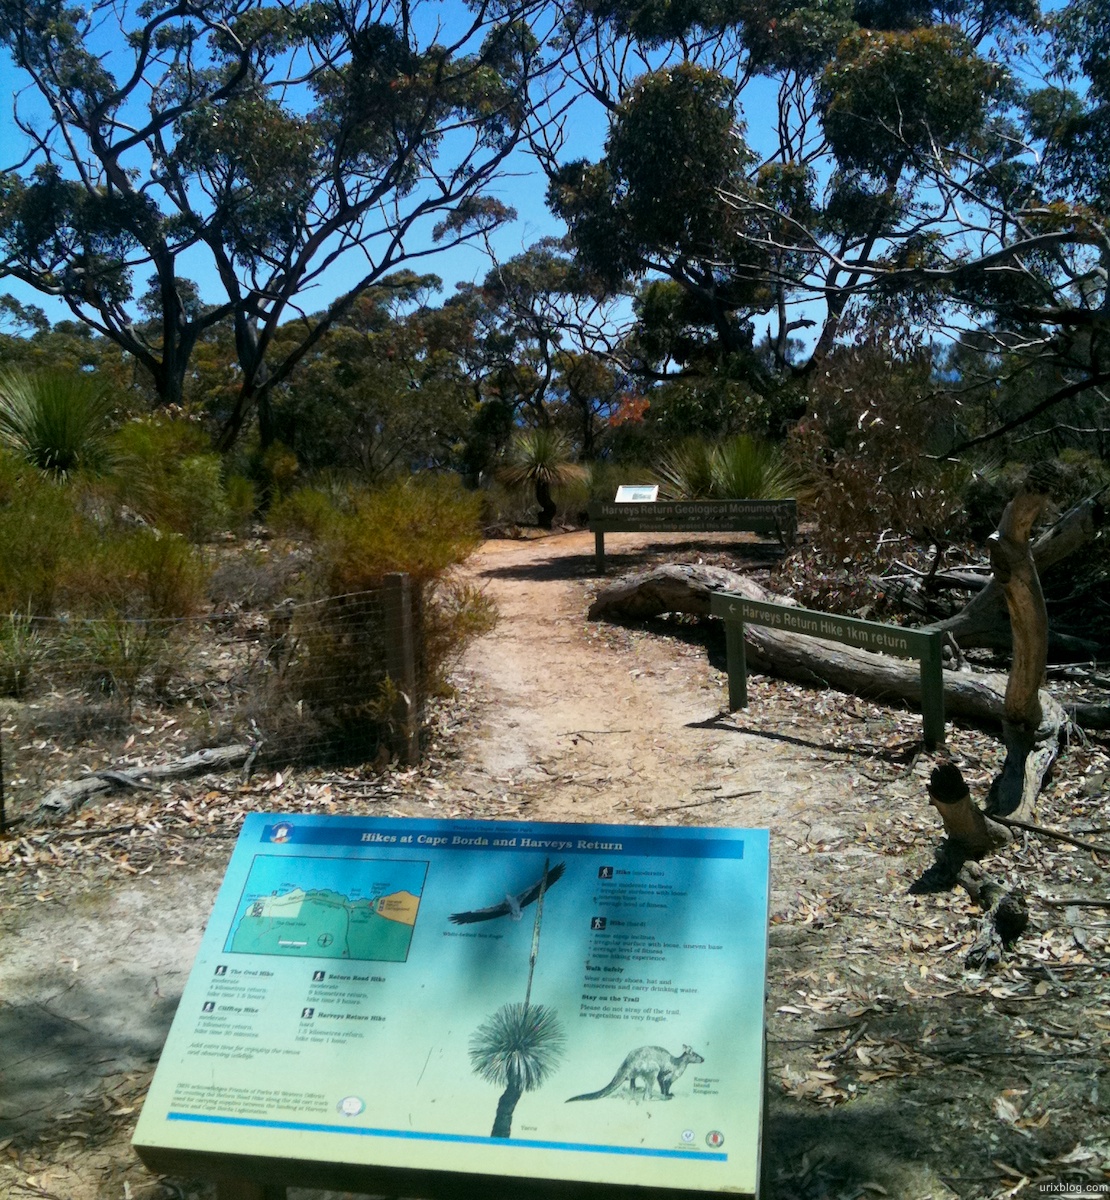 2011 South Australia, Kangaroo Island, Остров Кенгуру, Южная Австралия, Flinders Chase, Hikes at Cape Borda and Harveys return